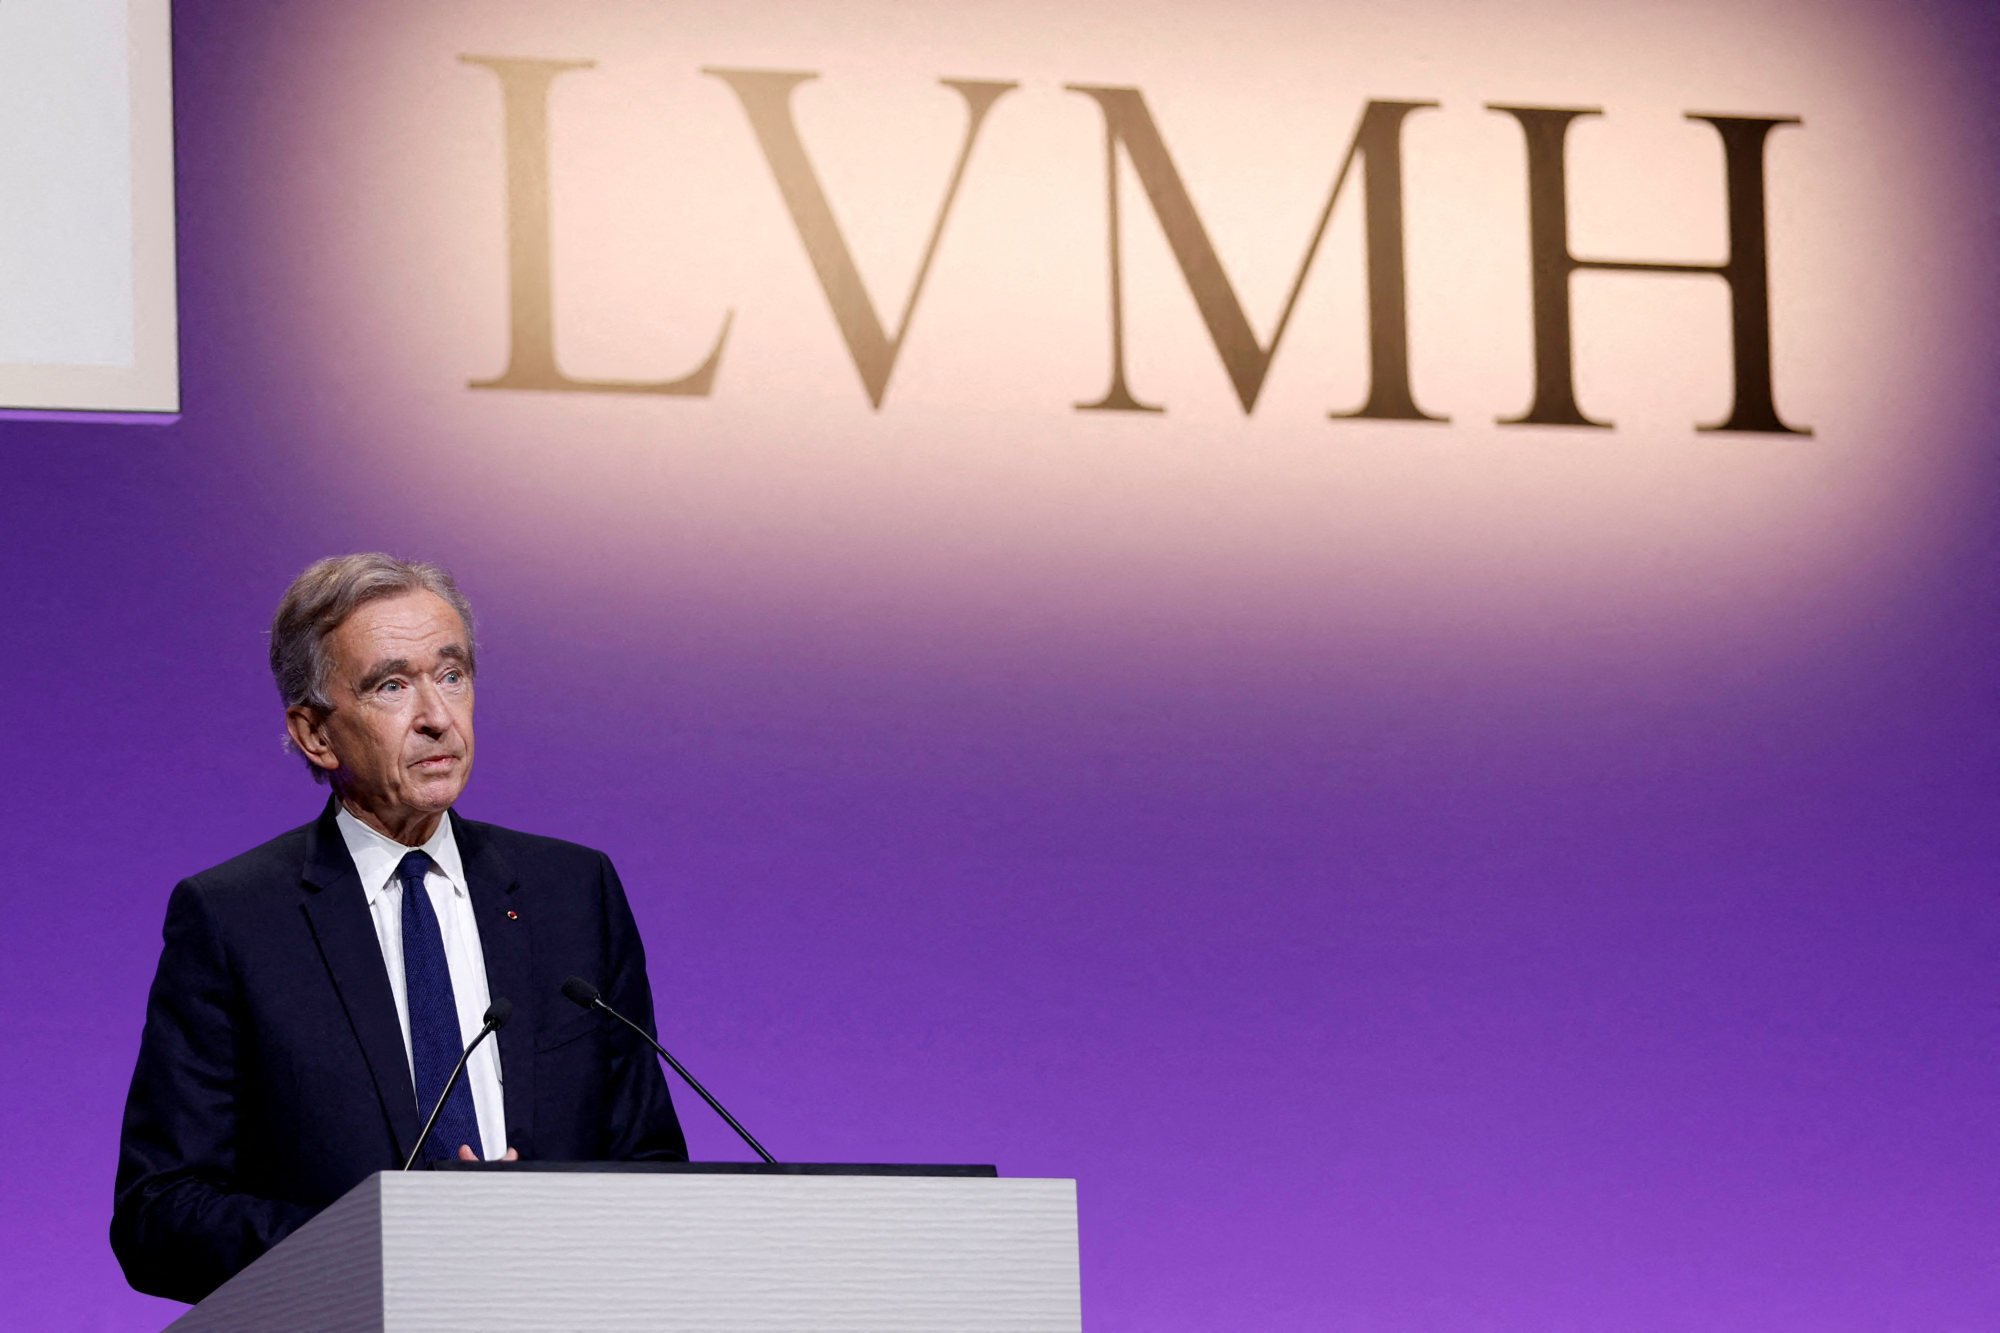 LVMH boss Bernard Arnault just reached new levels of wealth: after